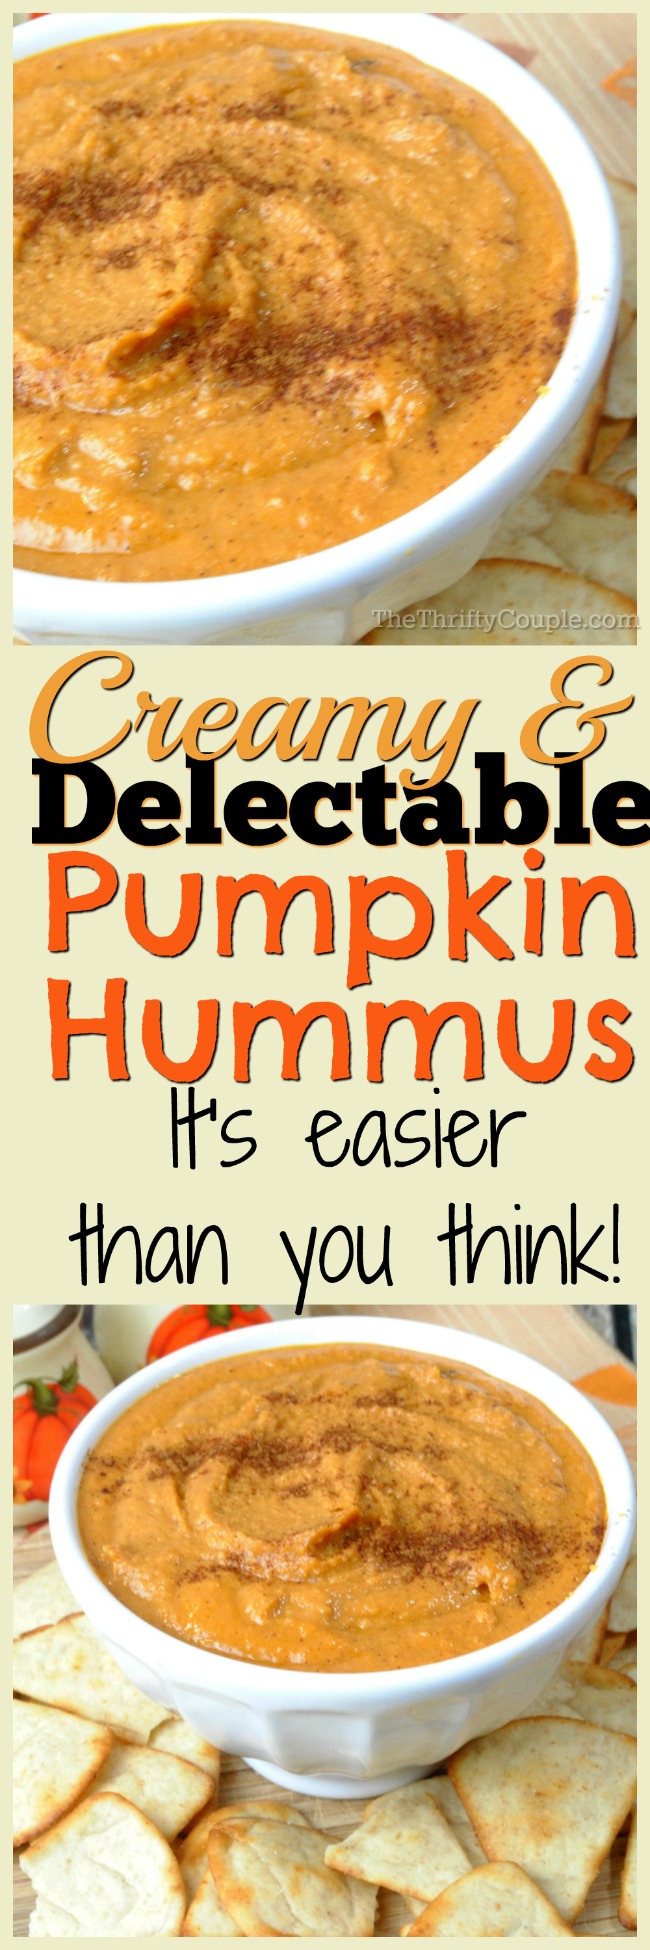 pumpkin-hummus-recipe